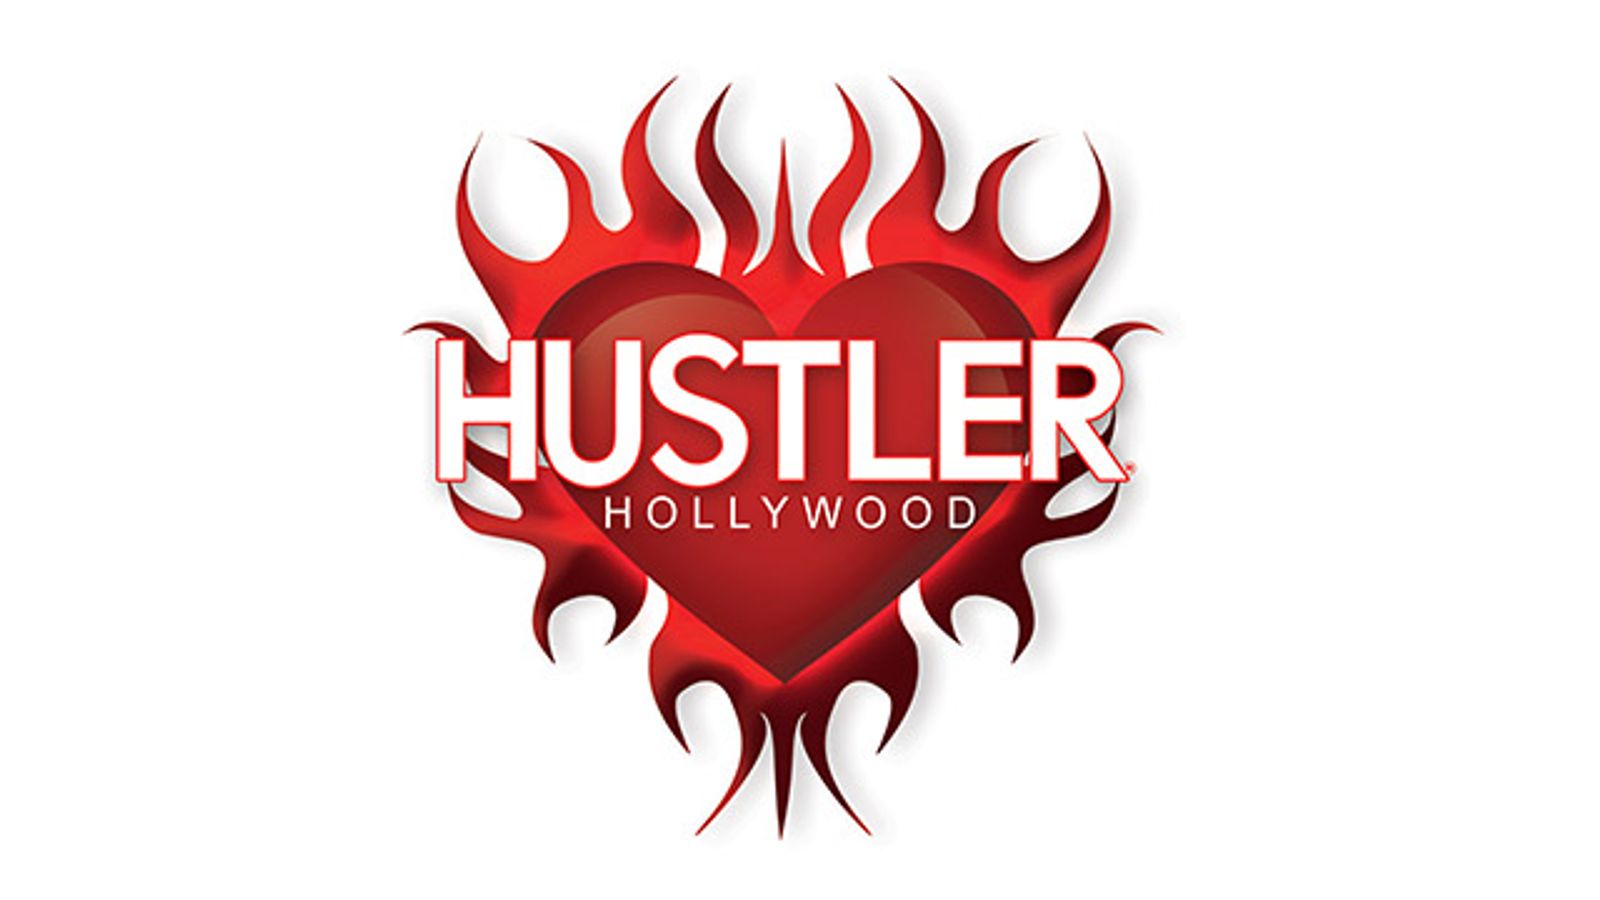 Larry Flynt Opens Hustler Hollywood in Oklahoma City